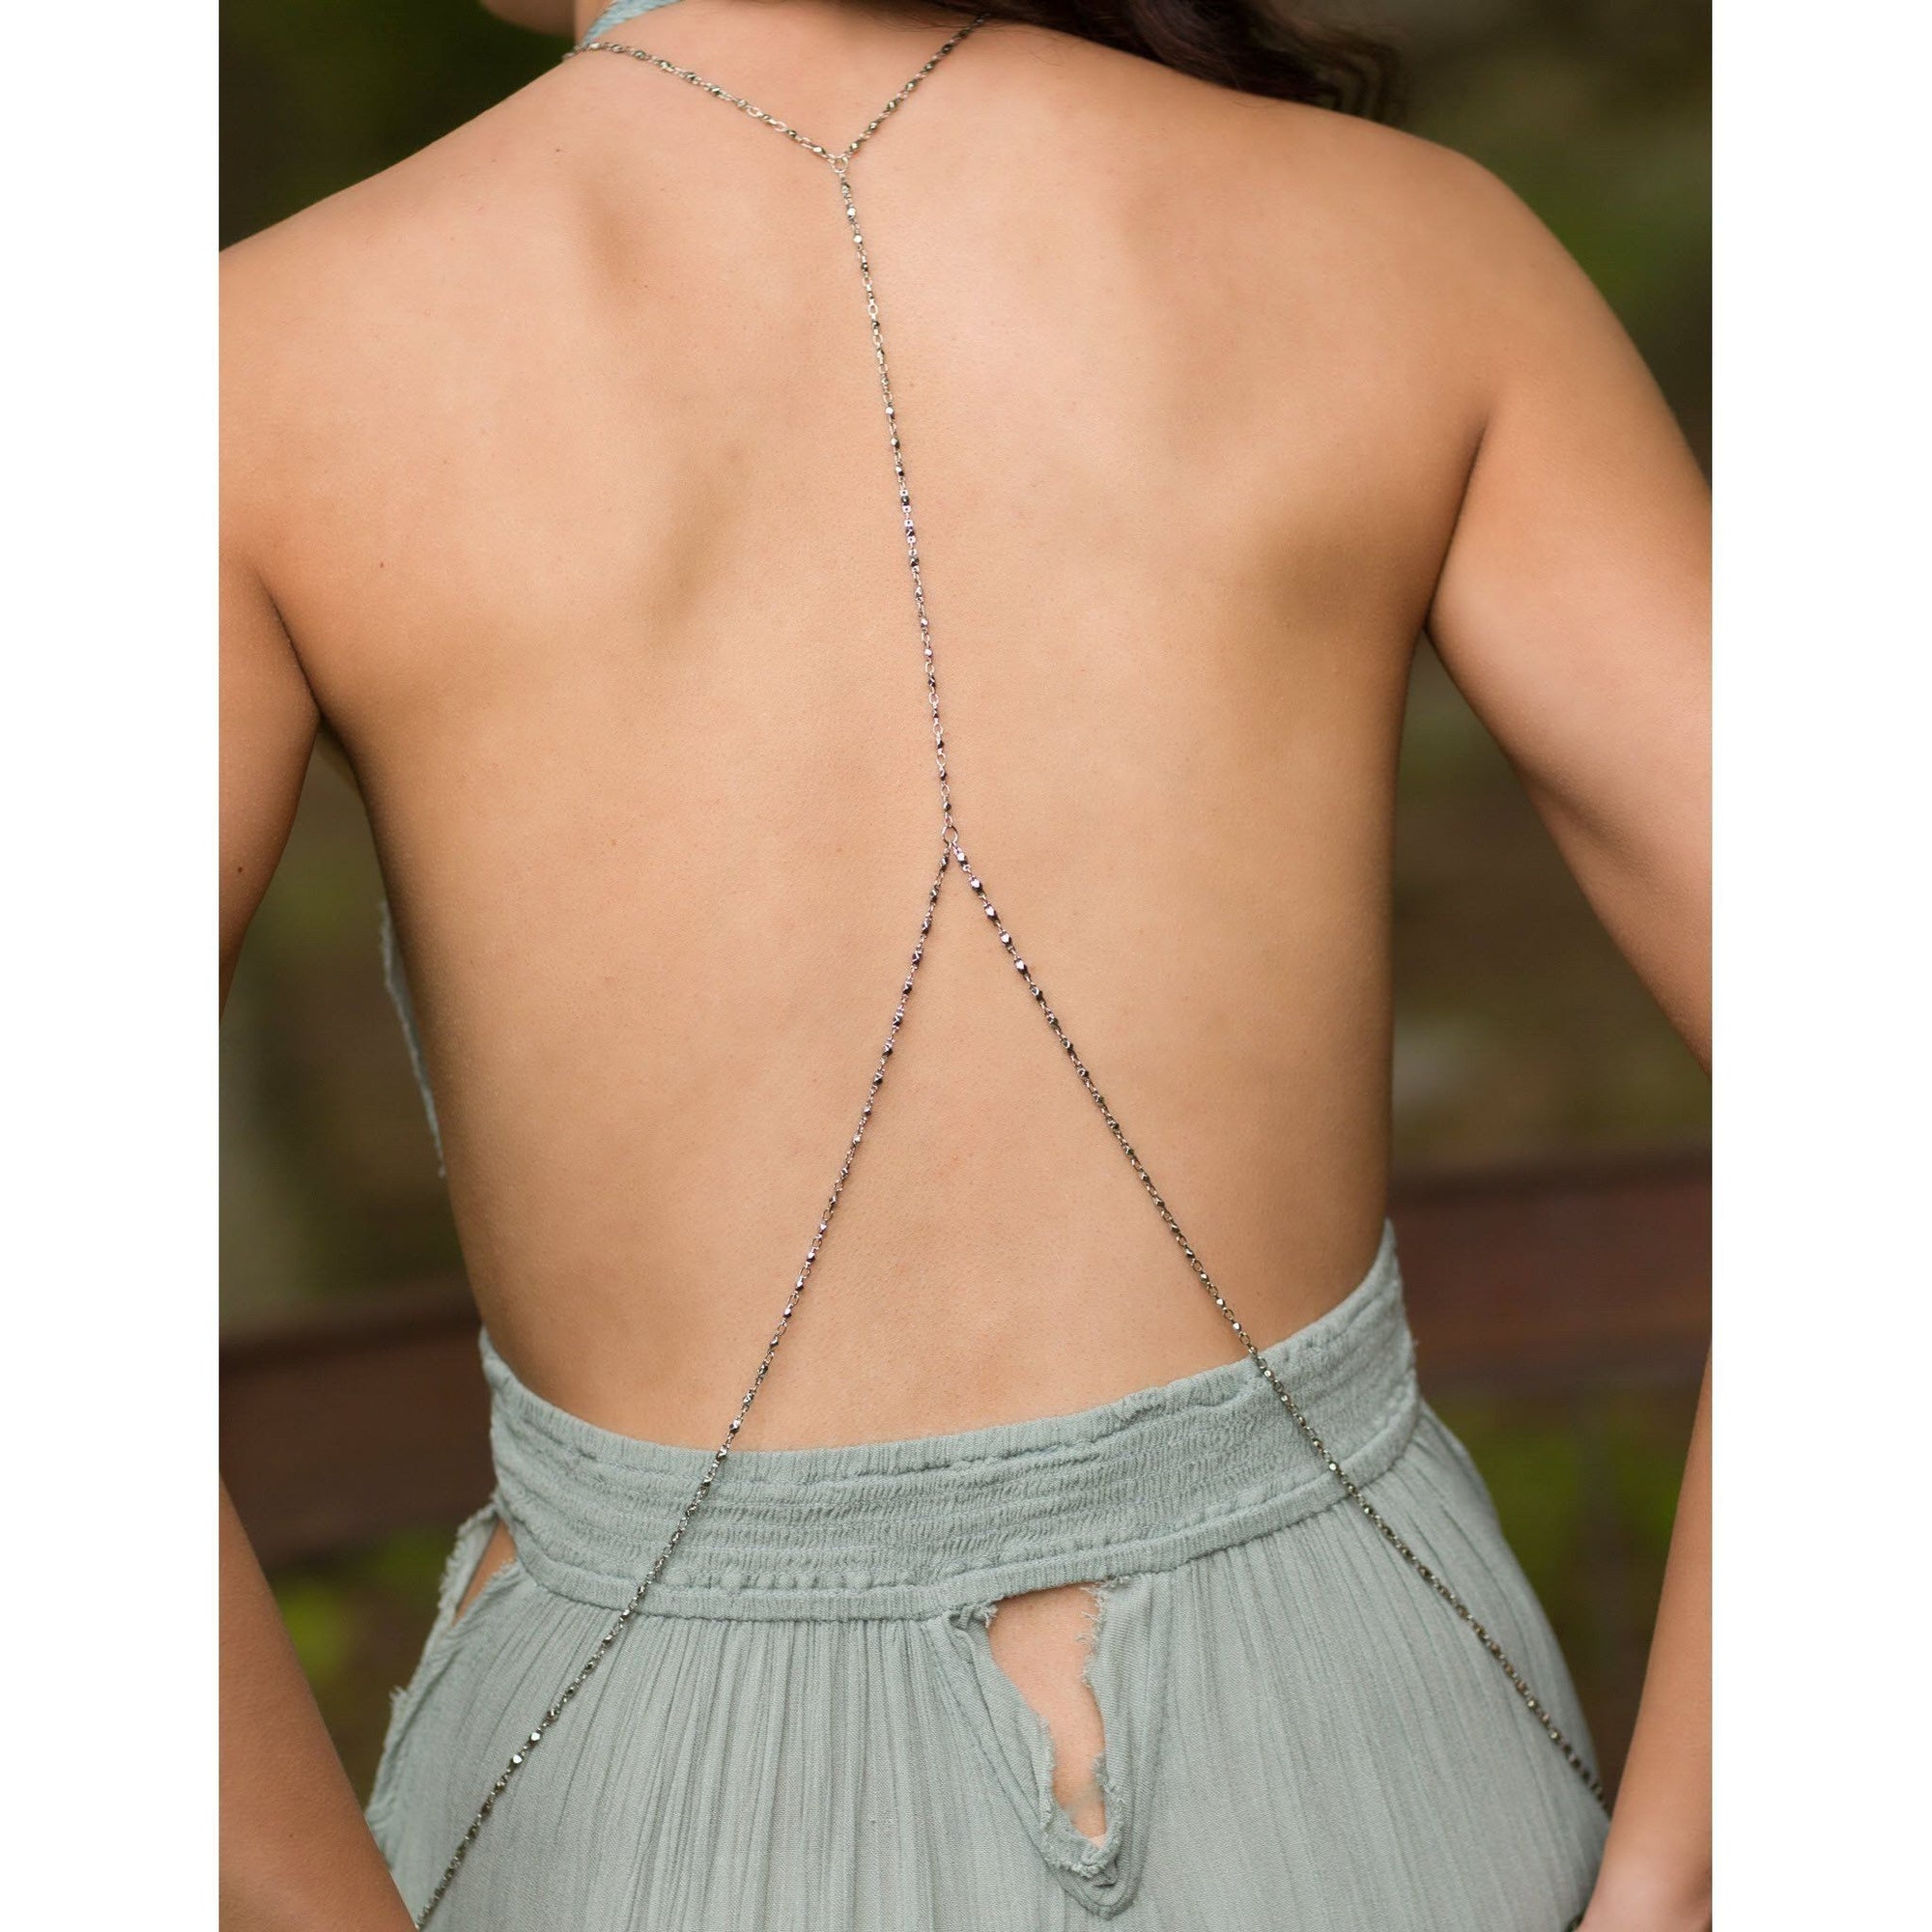 Body Chain Jewelry For Women Men- Fashion Boho Backless Full Body